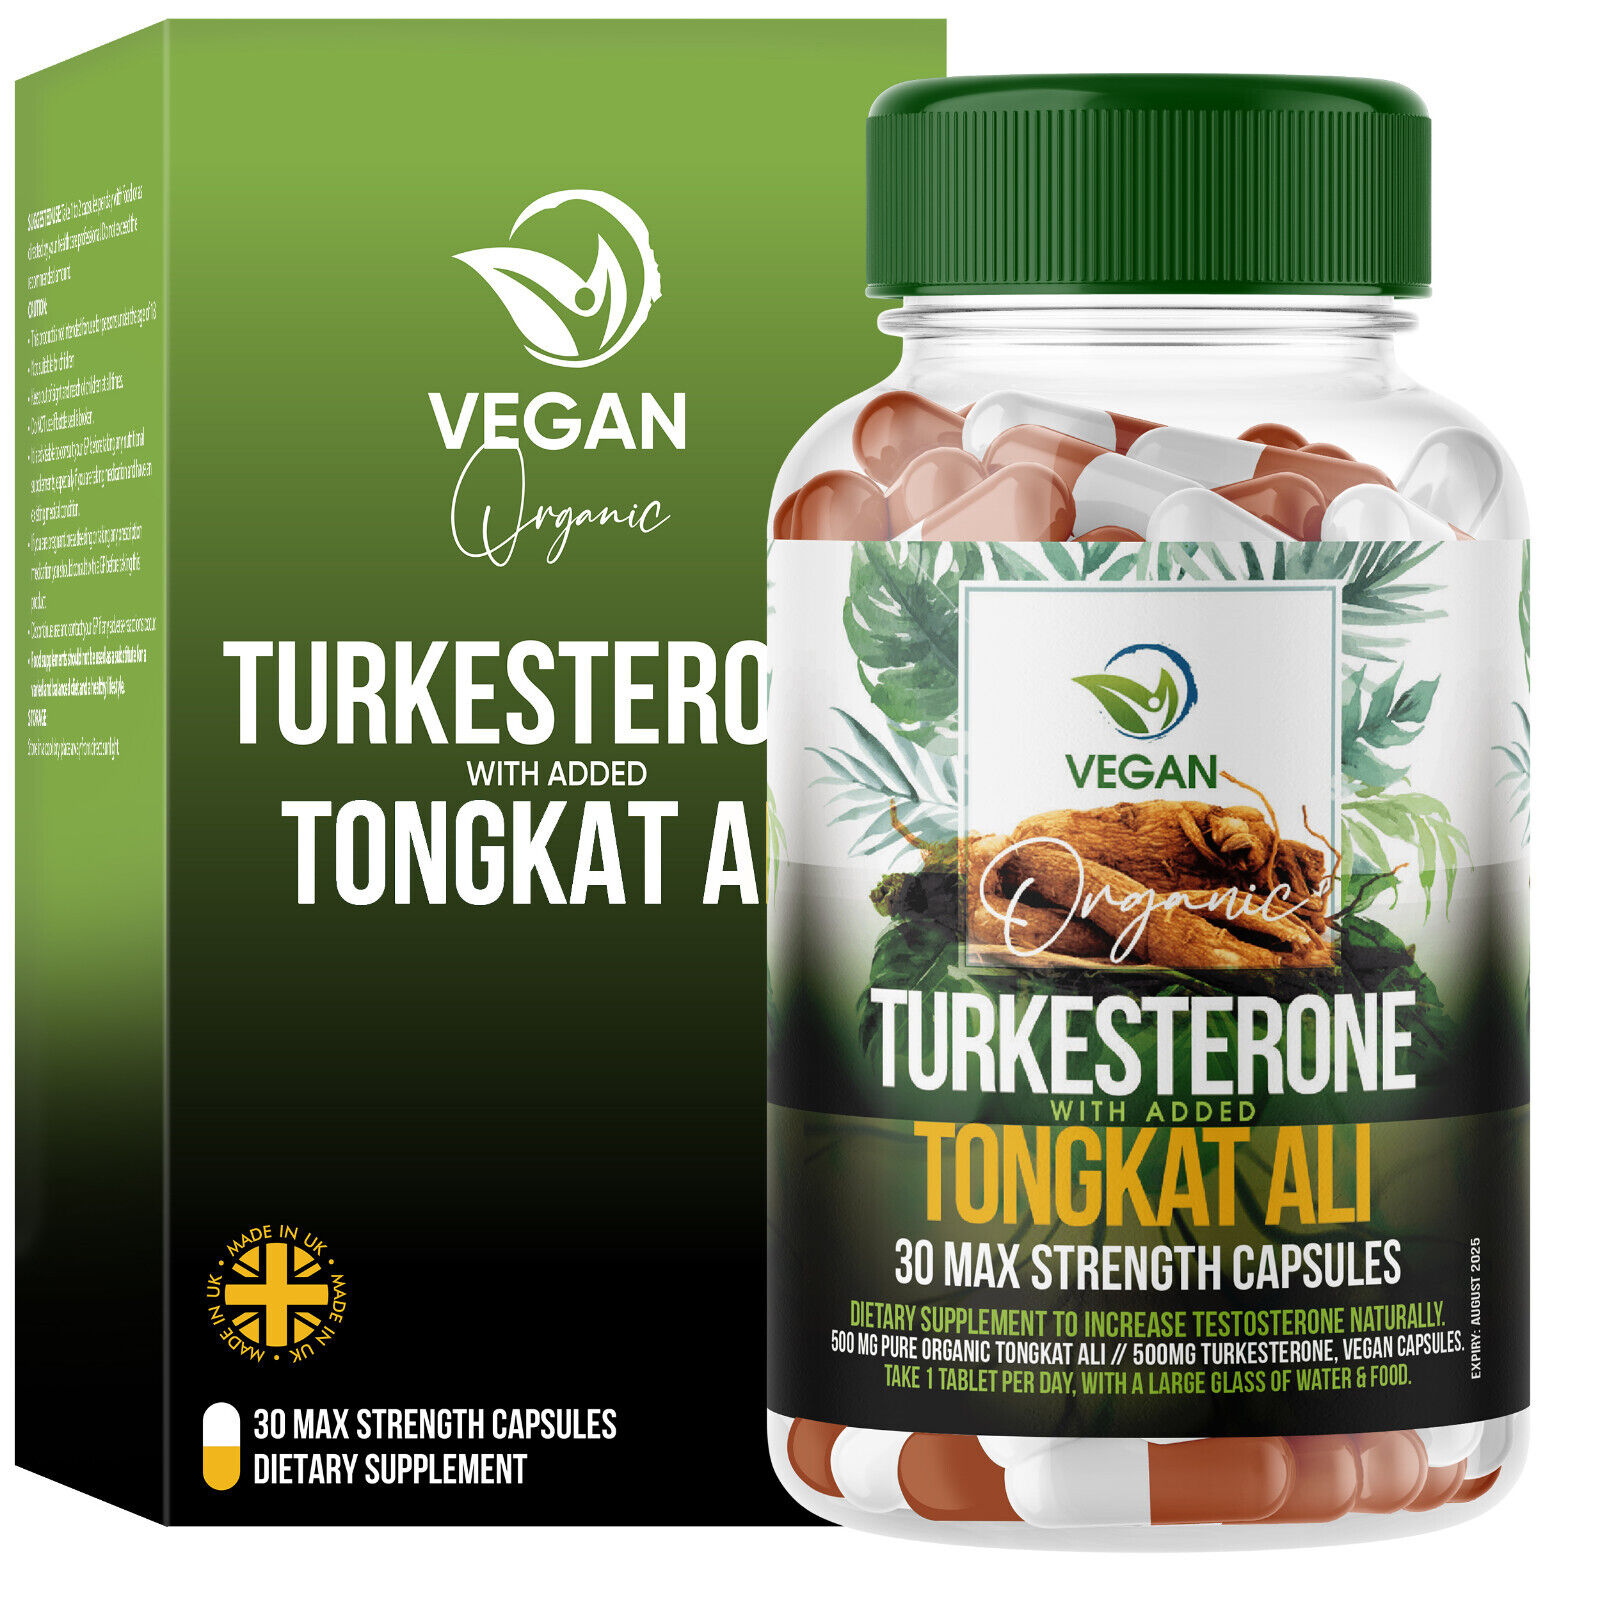 Organic Turkesterone AND Tong-Kat Ali, STRONG Test Booster - 100% Vegan Capsules